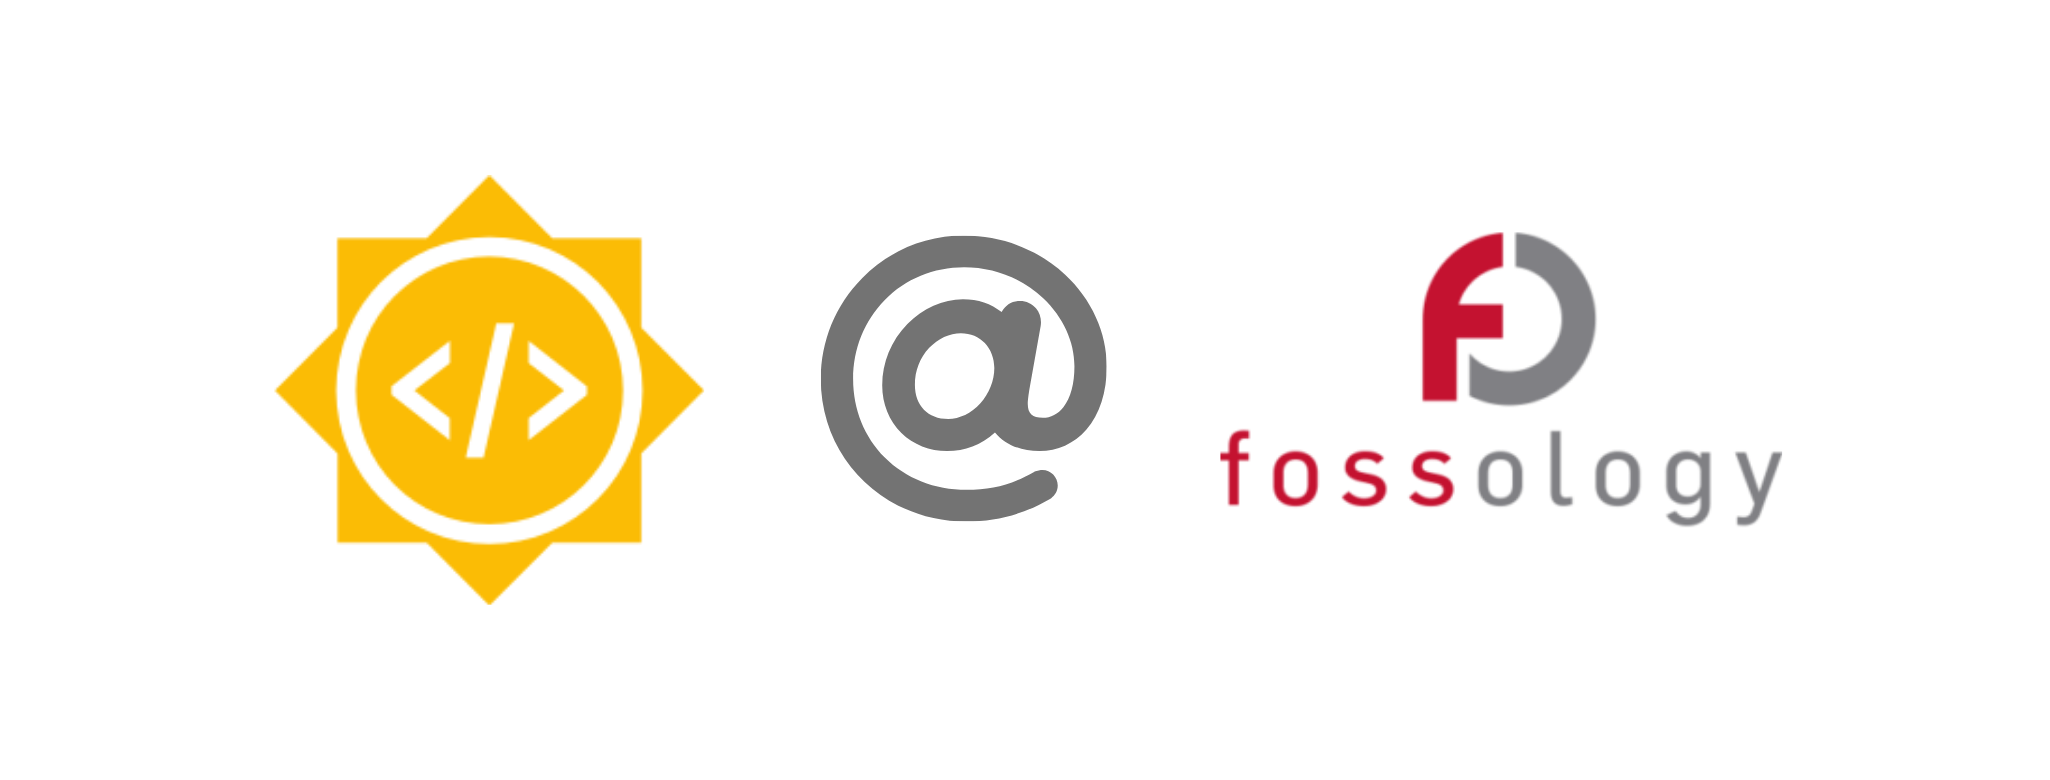 GSoC-FOSSology